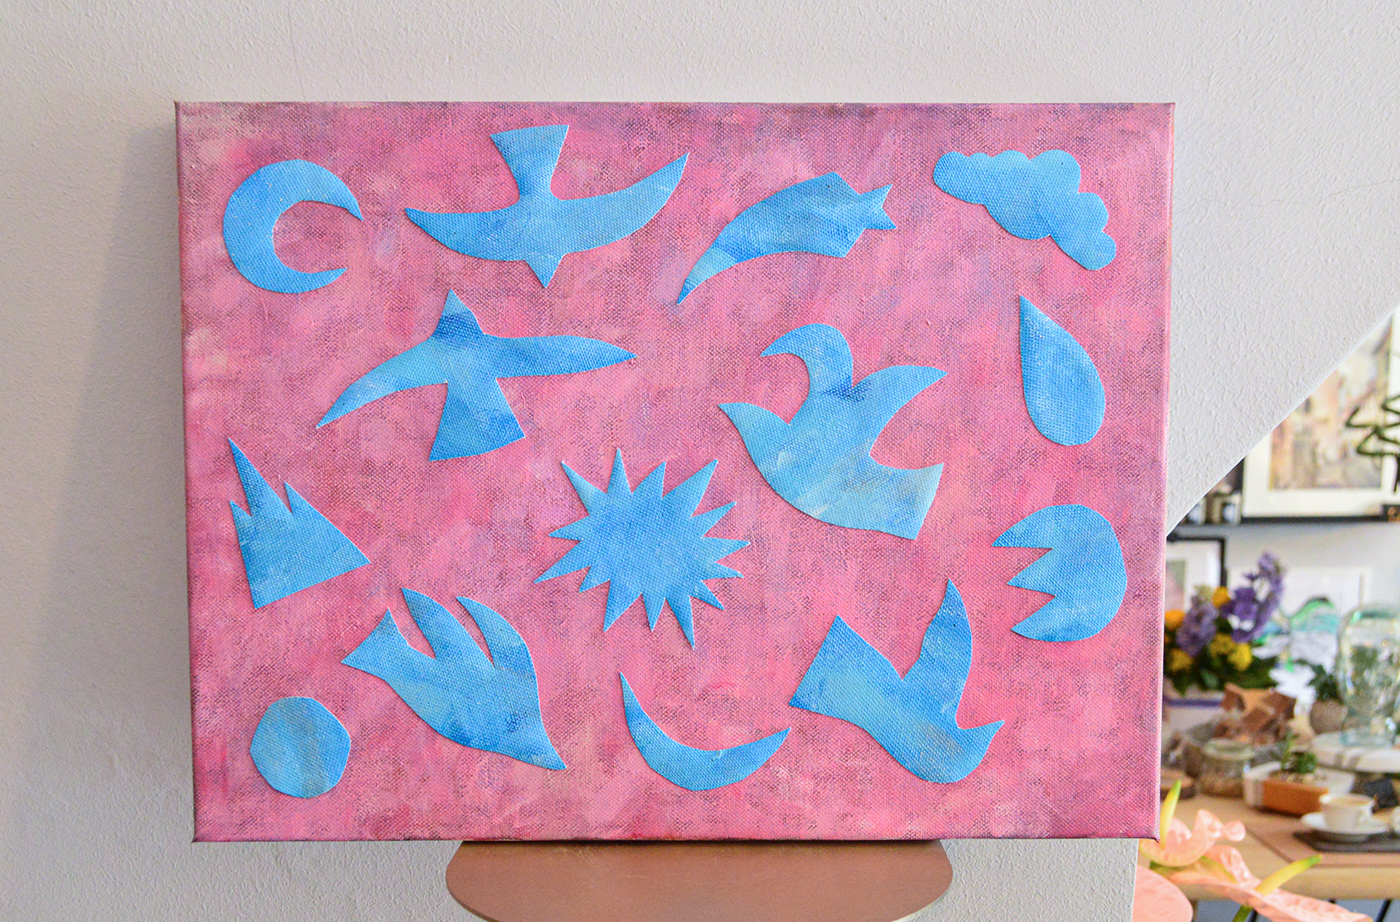 Acrylic paint canvas collage birds symbols symbolism naivite daydrems